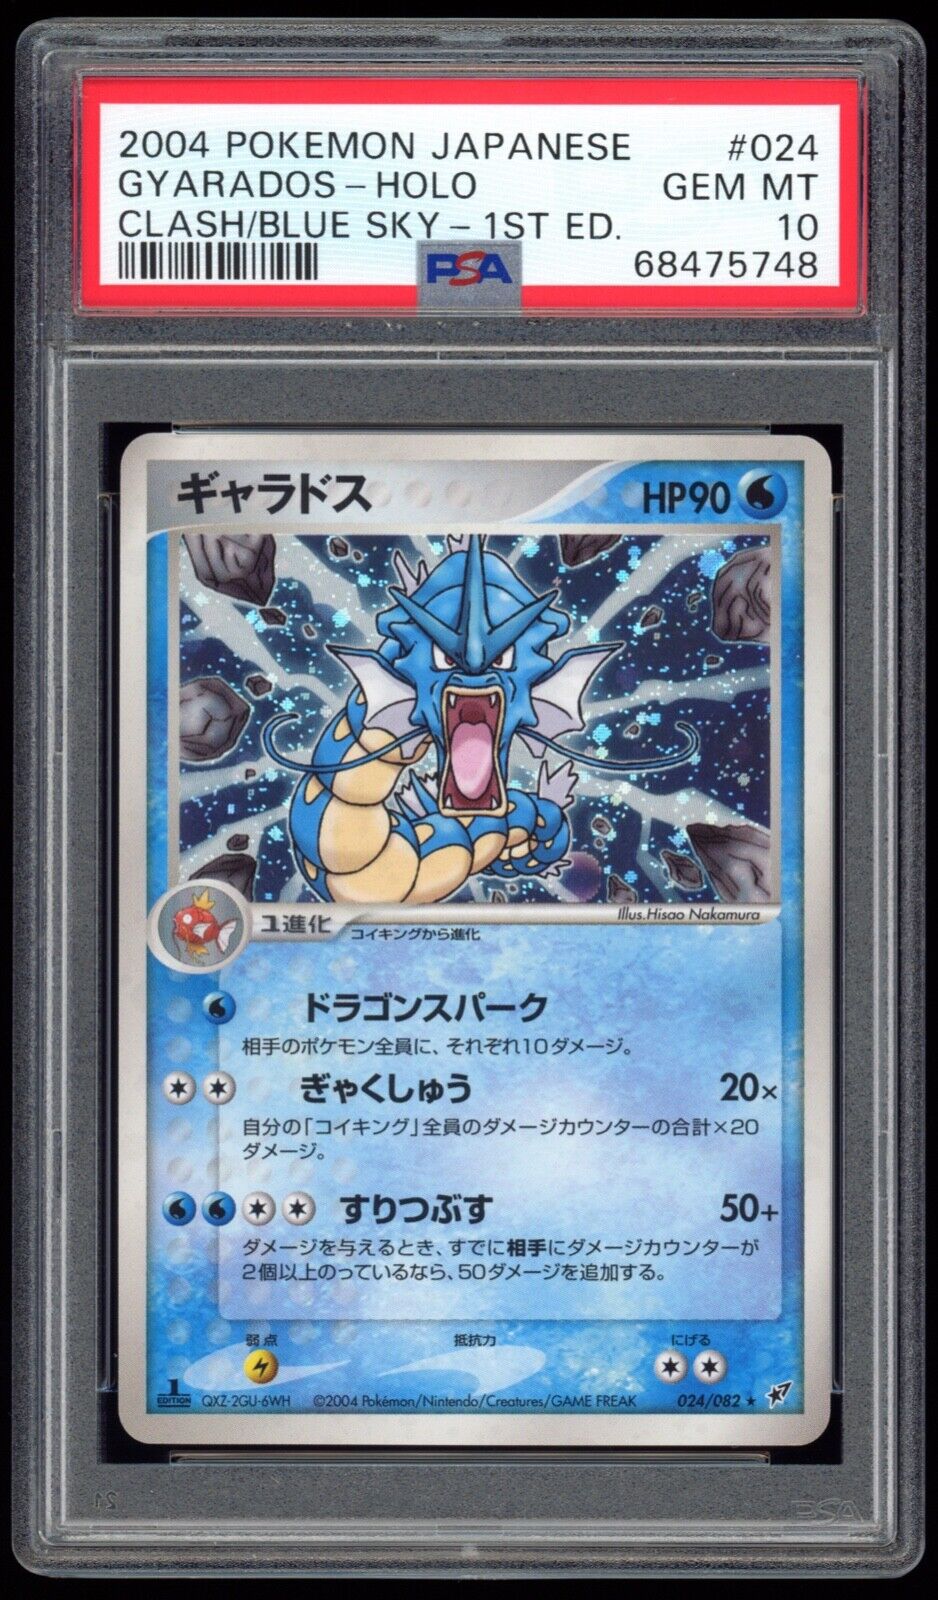 PSA 10 Gem Mint 1ED Japanese Gyarados Holo Clash of the Blue Sky Pokemon Card 24